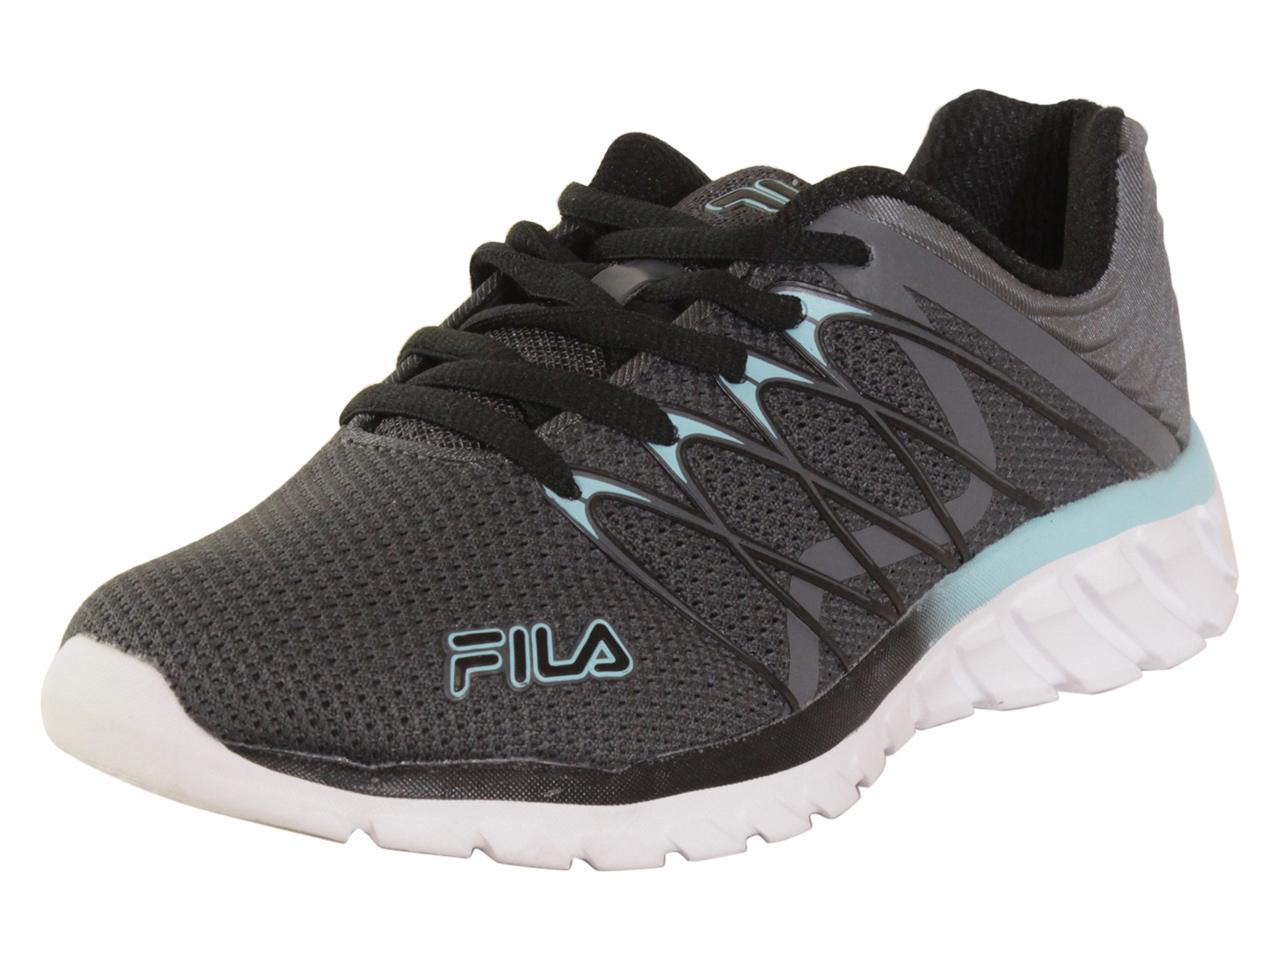 fila women's shoes with memory foam